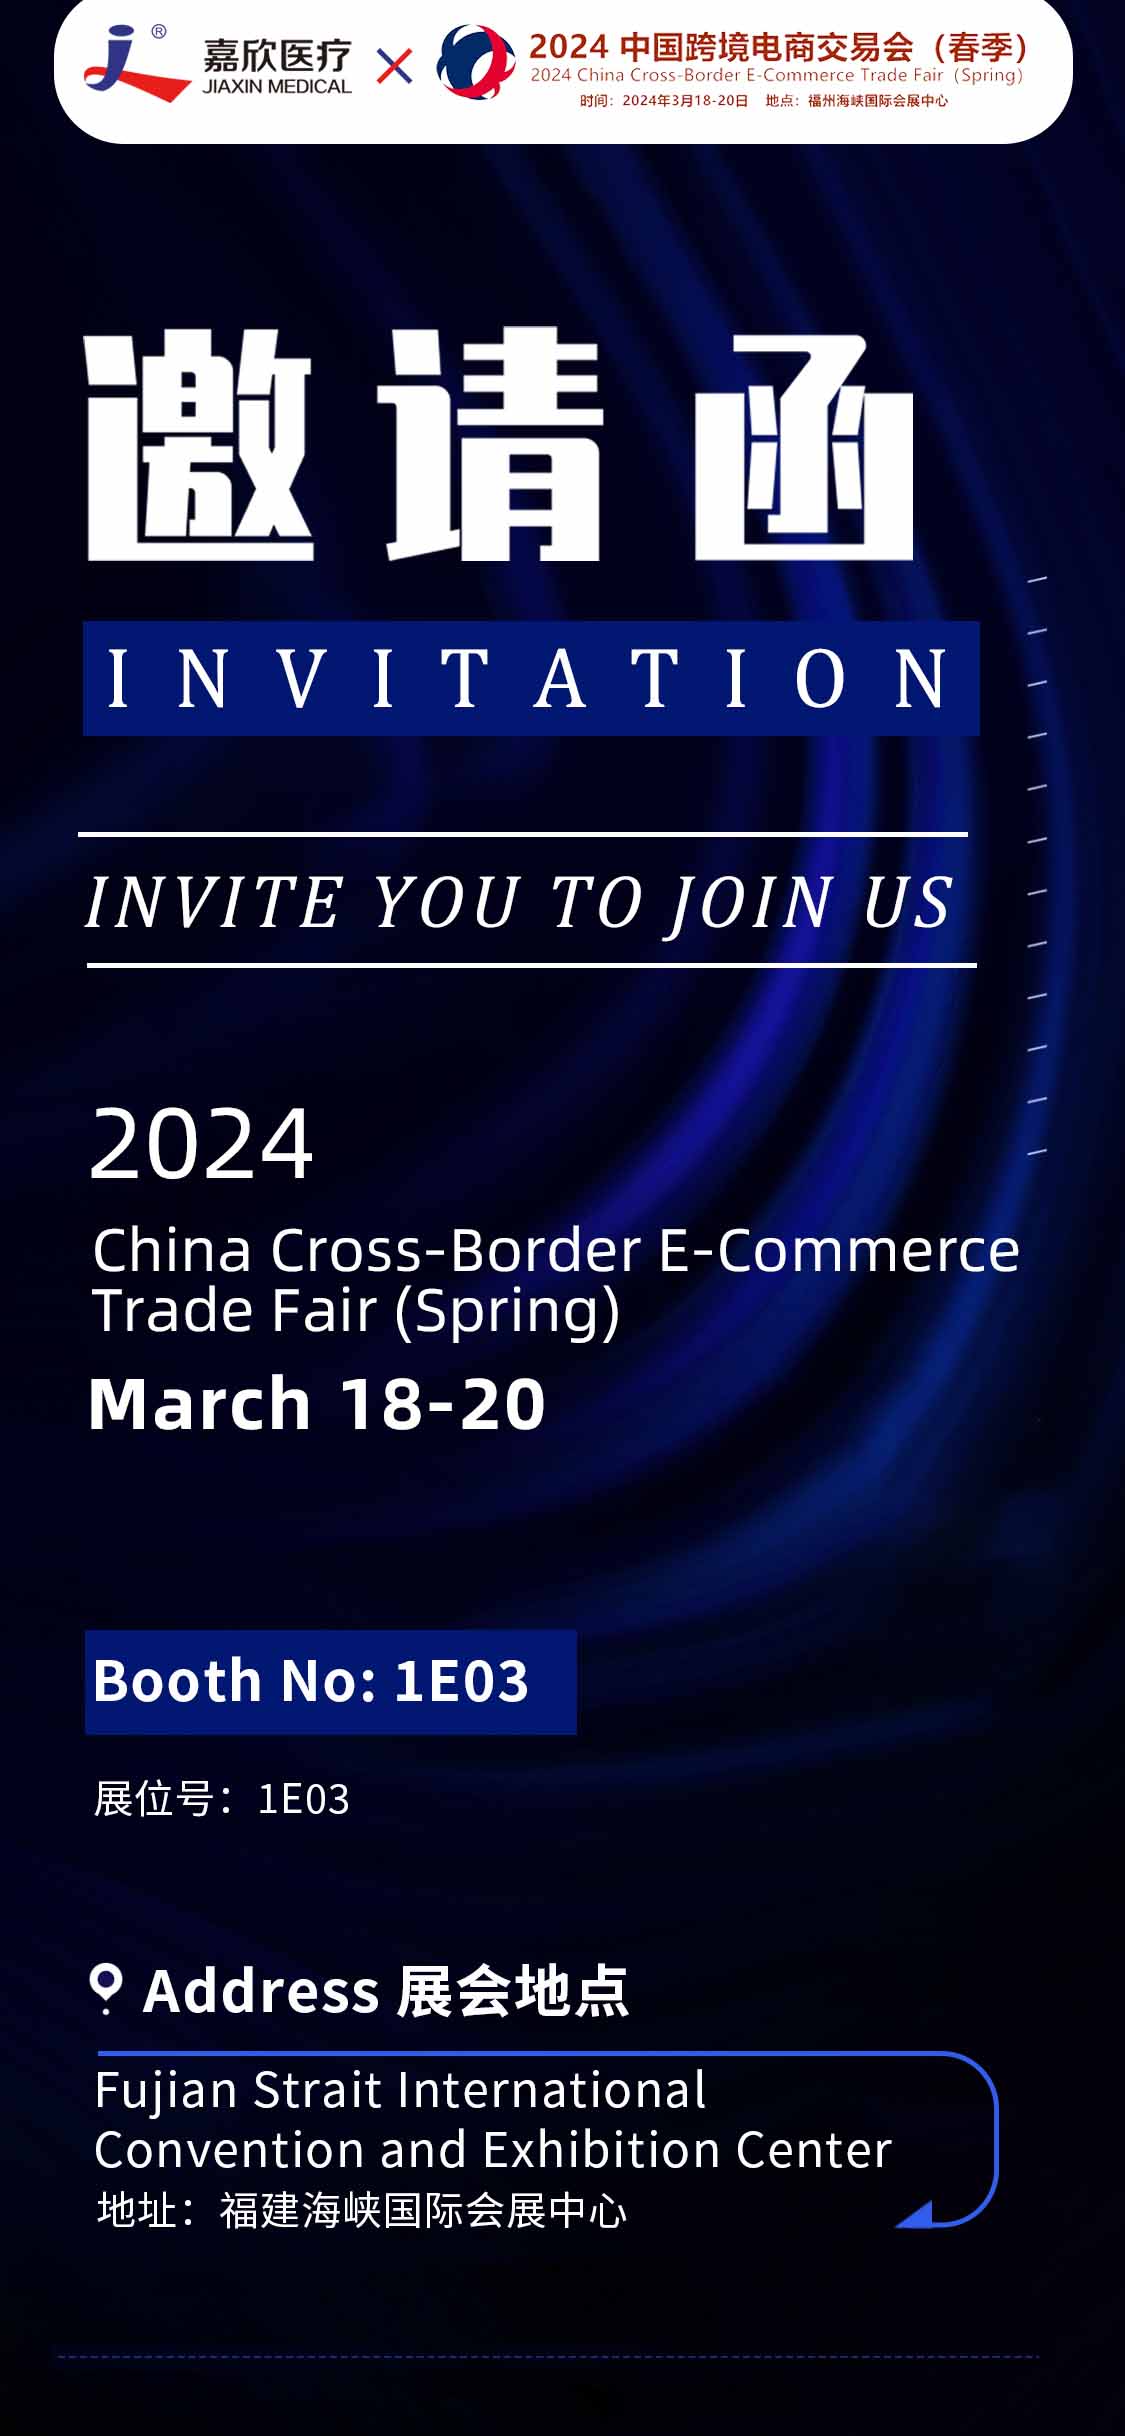 2024 China Cross-Border E-Commerce Trade Fair (Spring)